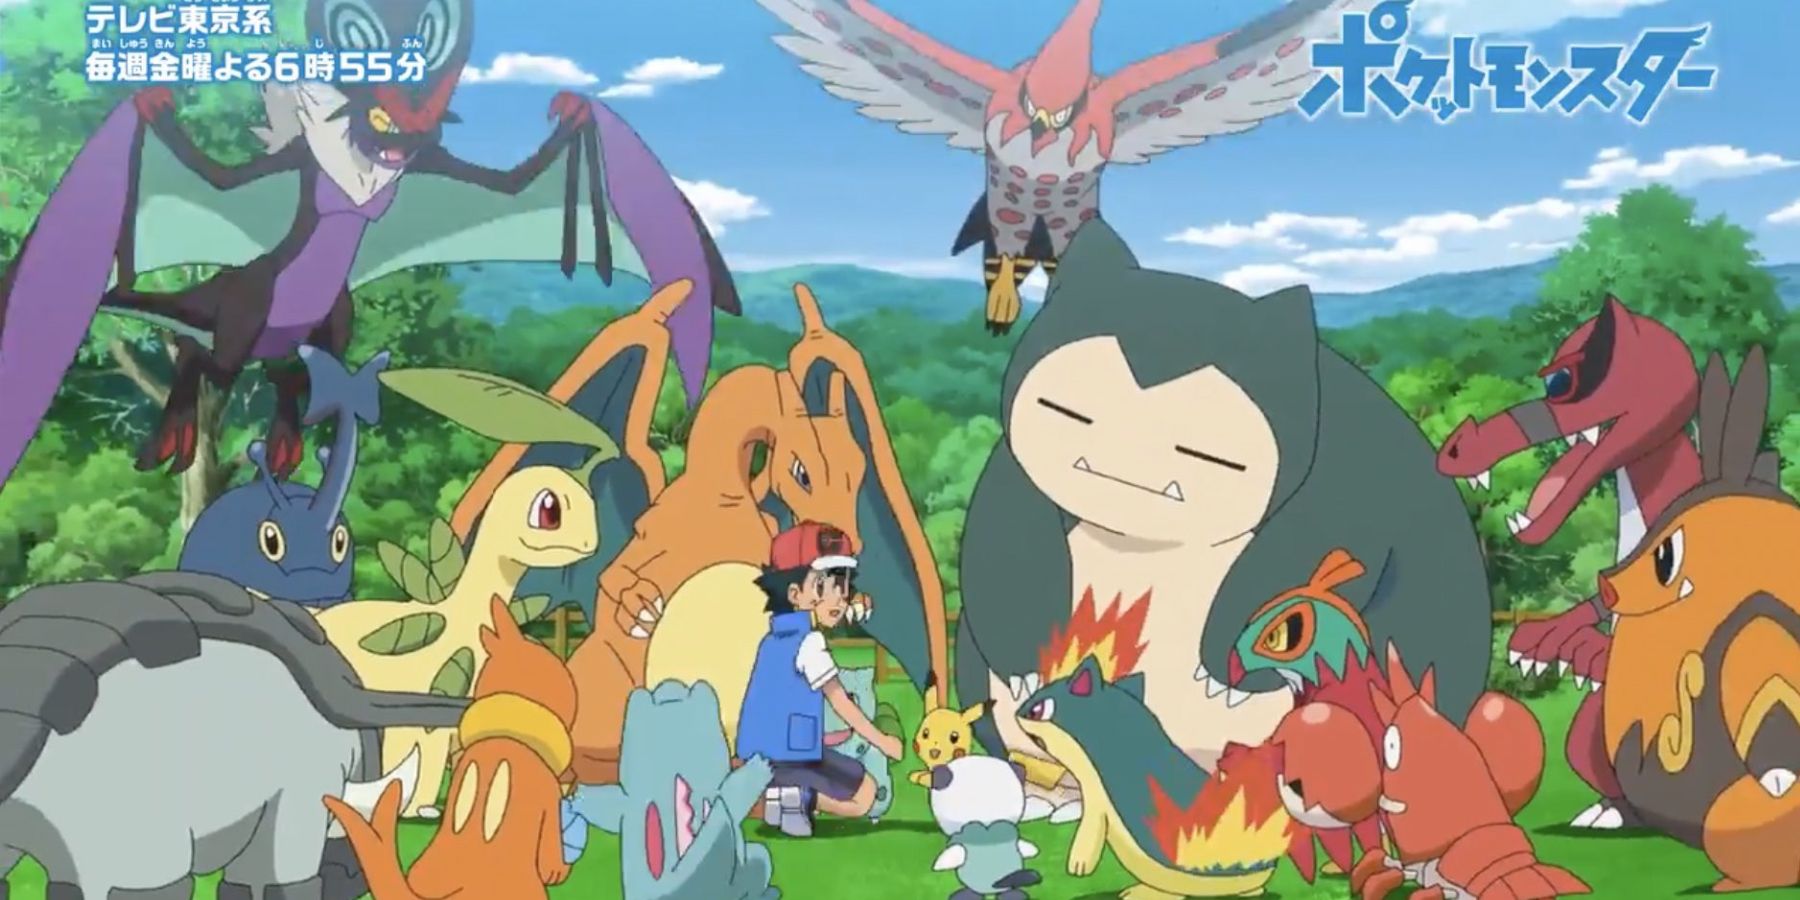 Ash reunites with his old Pokémon